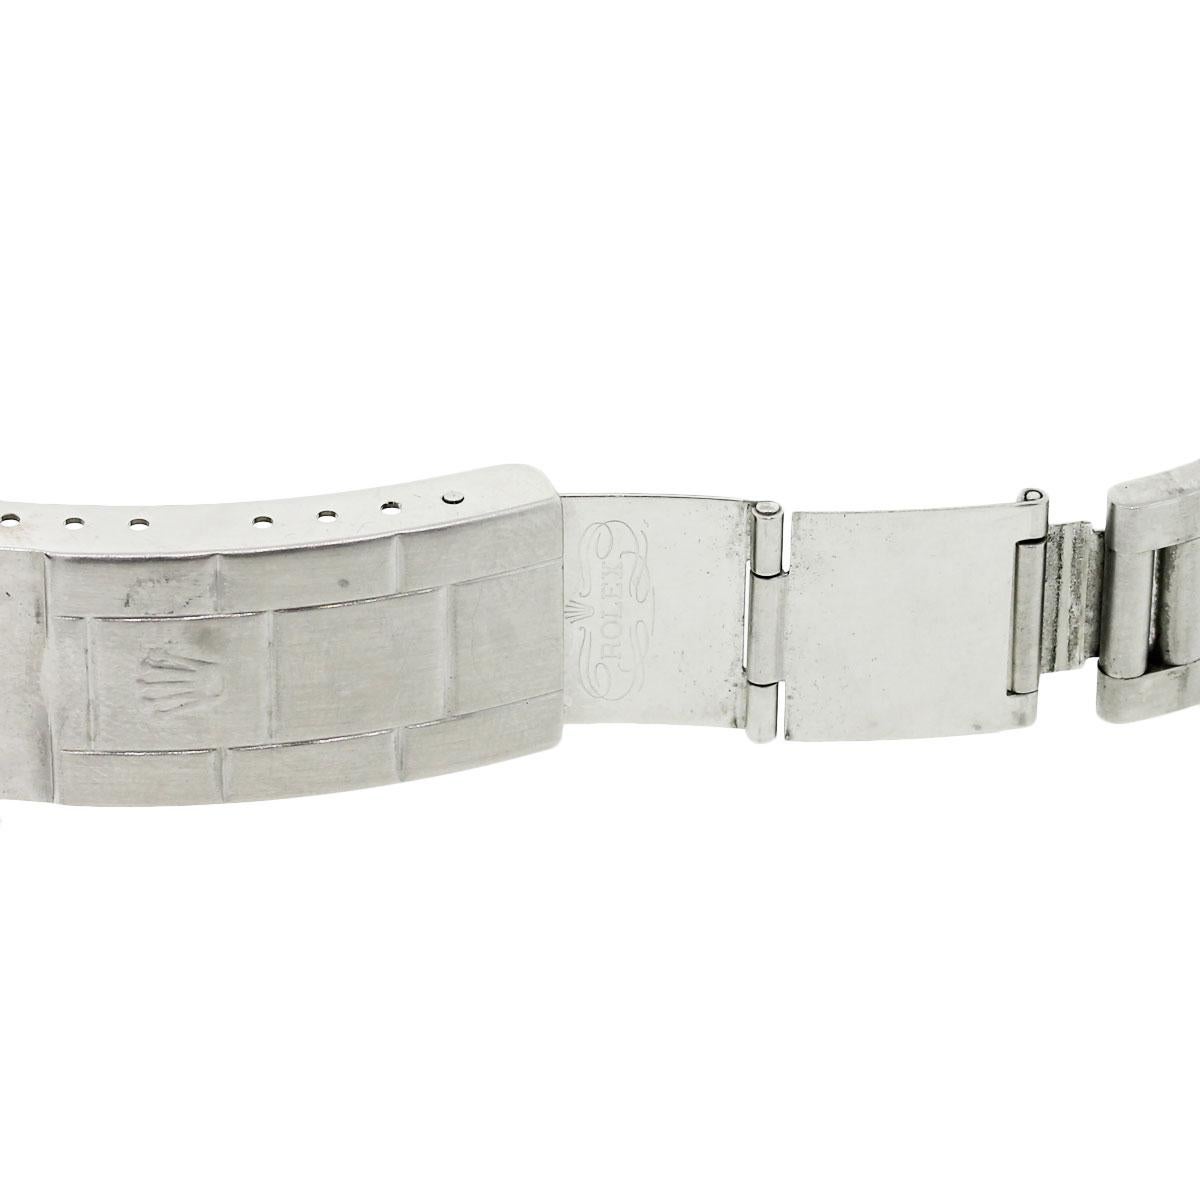 Rolex Stainless steel Submariner Automatic Wristwatch, Ref 16610 1